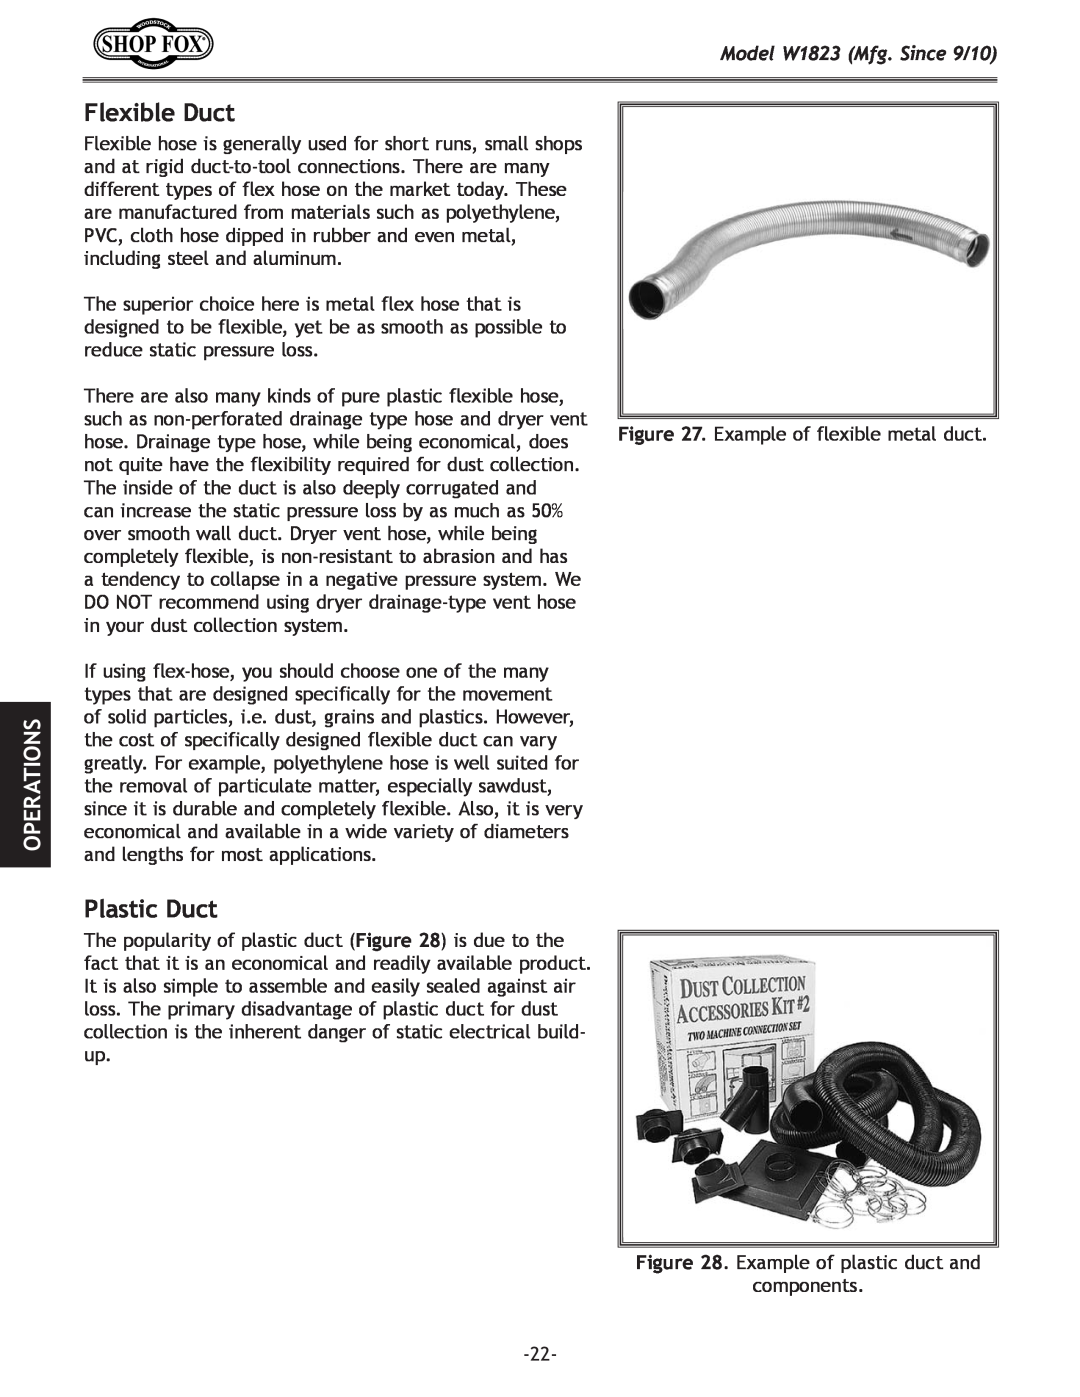 Woodstock manual Flexible Duct, Plastic Duct, Operations, Model W1823 Mfg. Since 9/10 